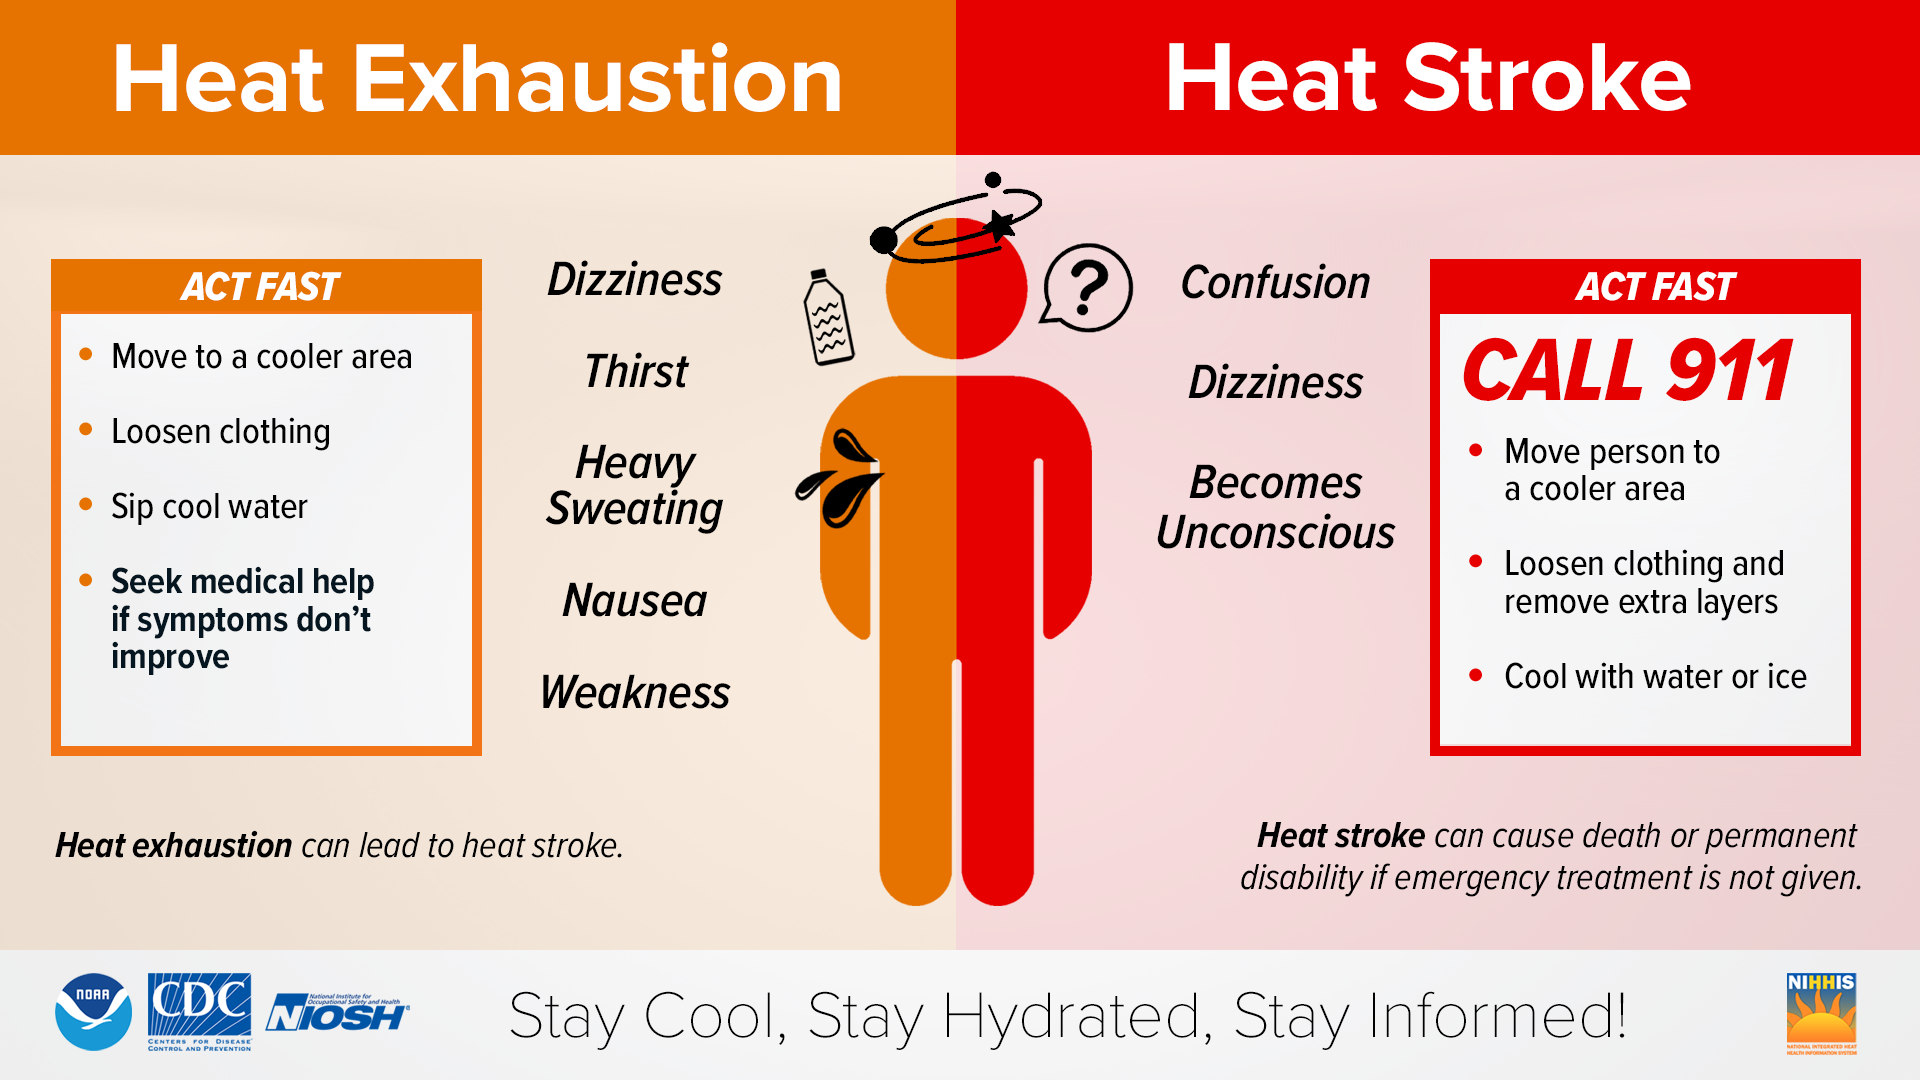 Heat symptoms